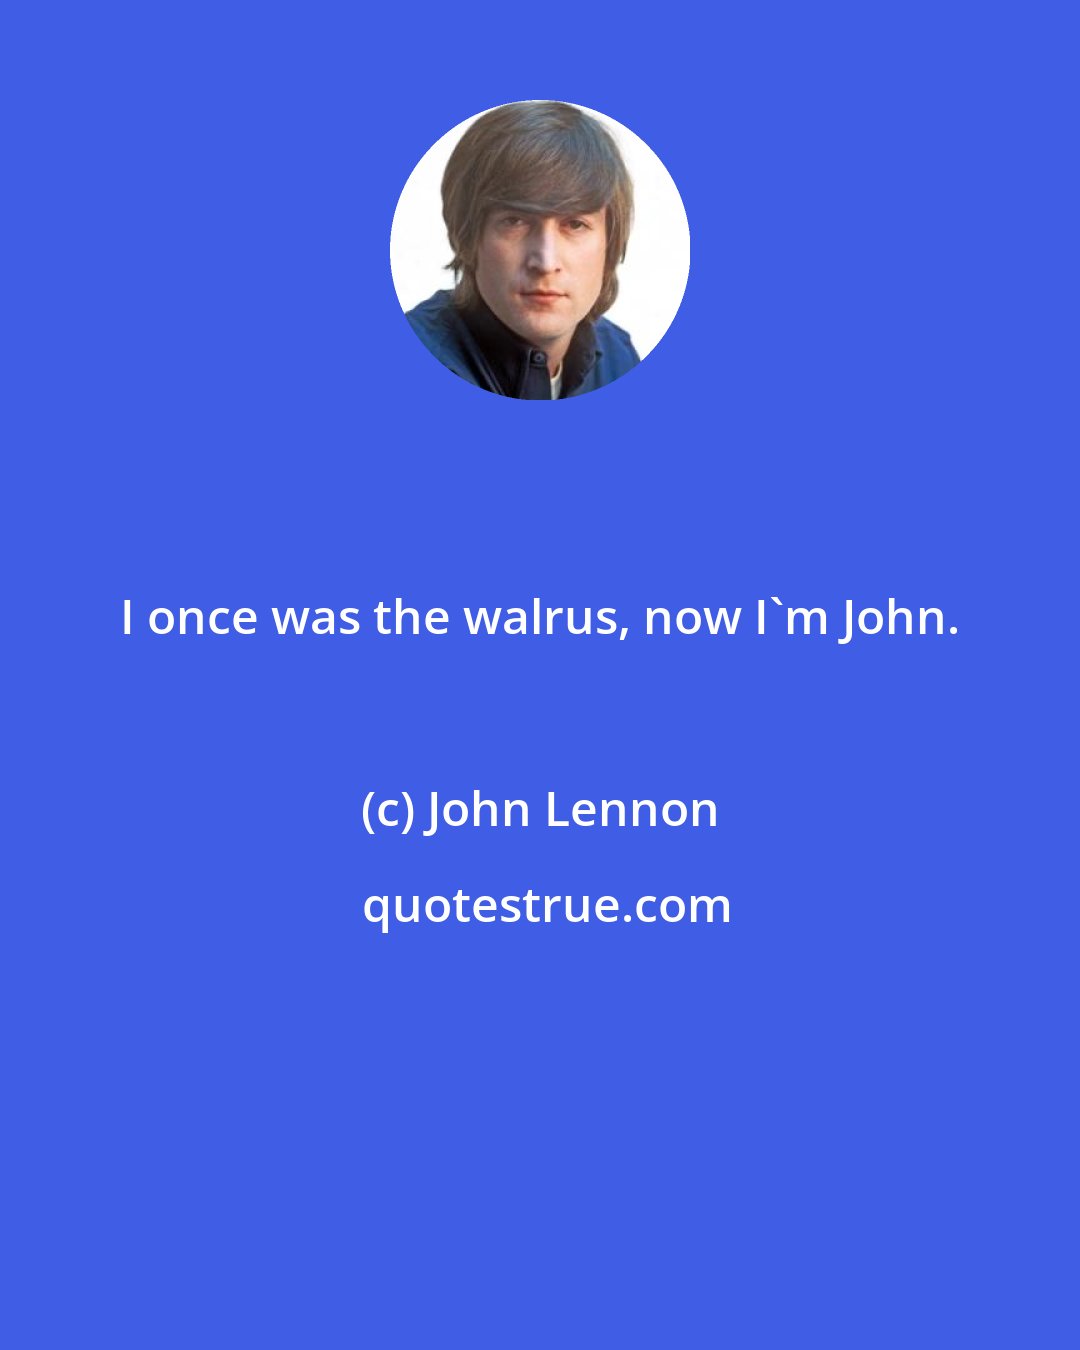 John Lennon: I once was the walrus, now I'm John.